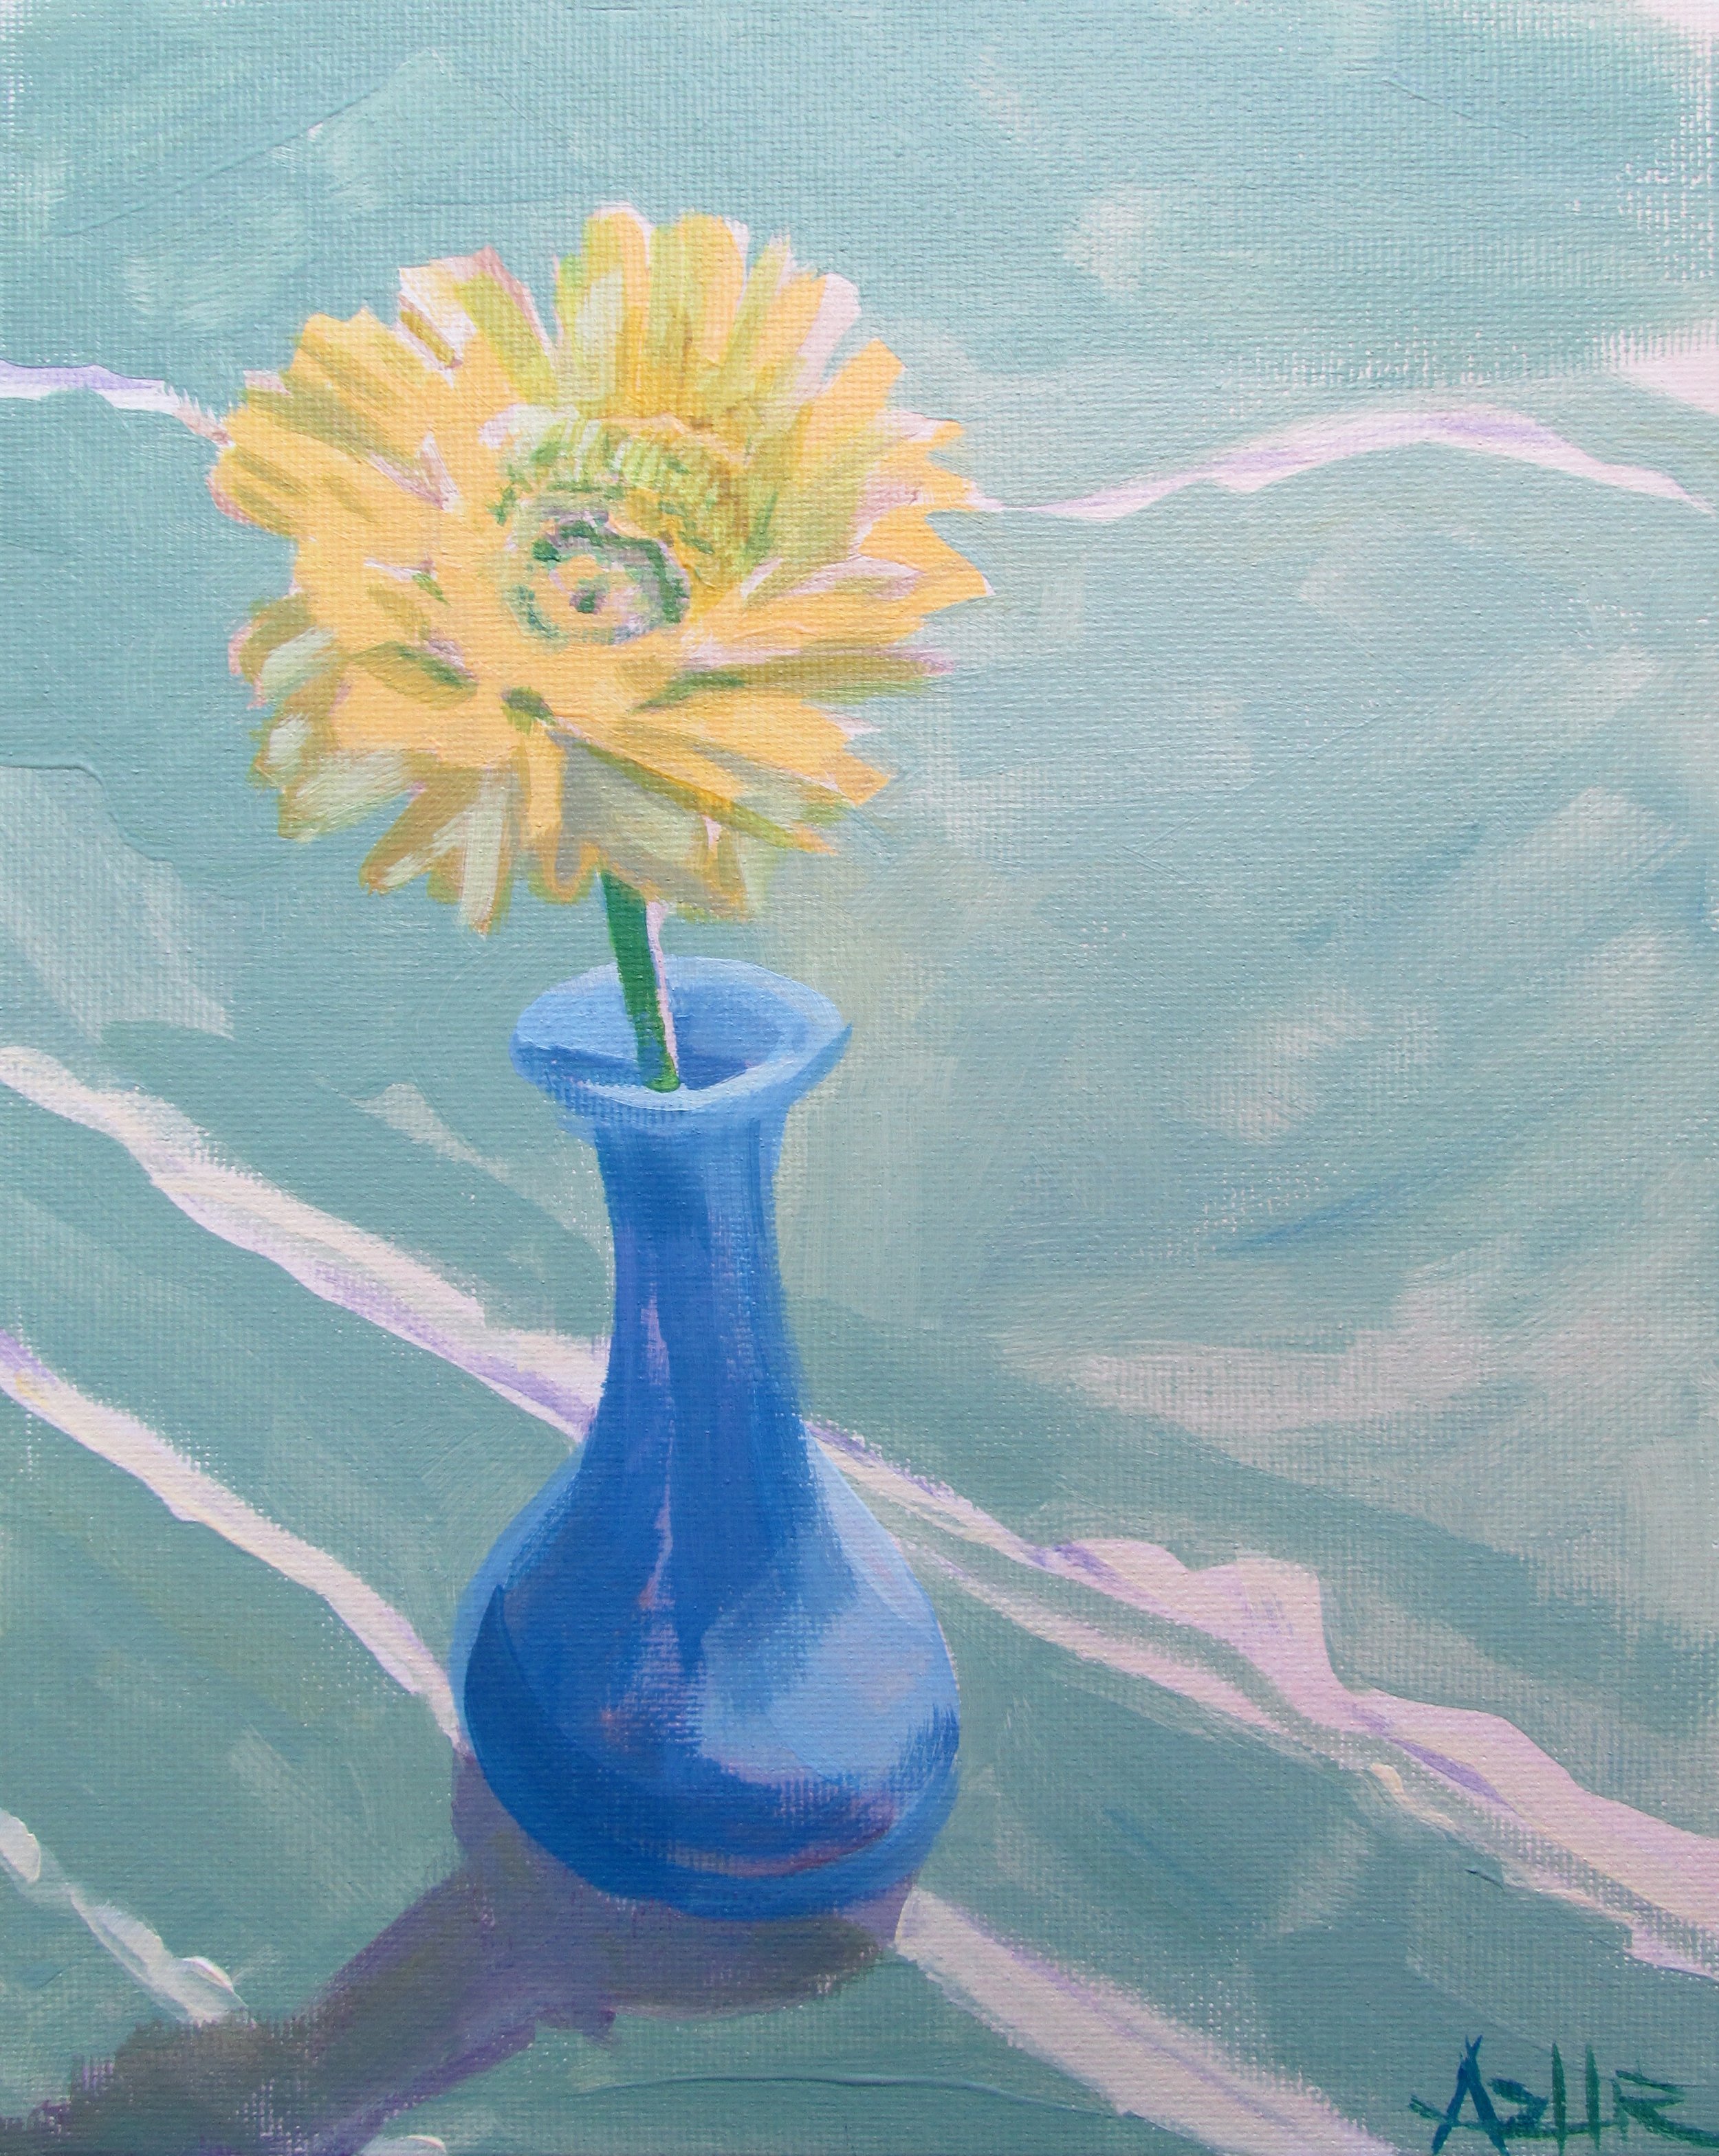 SOLD, Sunshine in a Bottle, Copyright 2016 Hirschten, Oil on Canvas, 8" x 10"